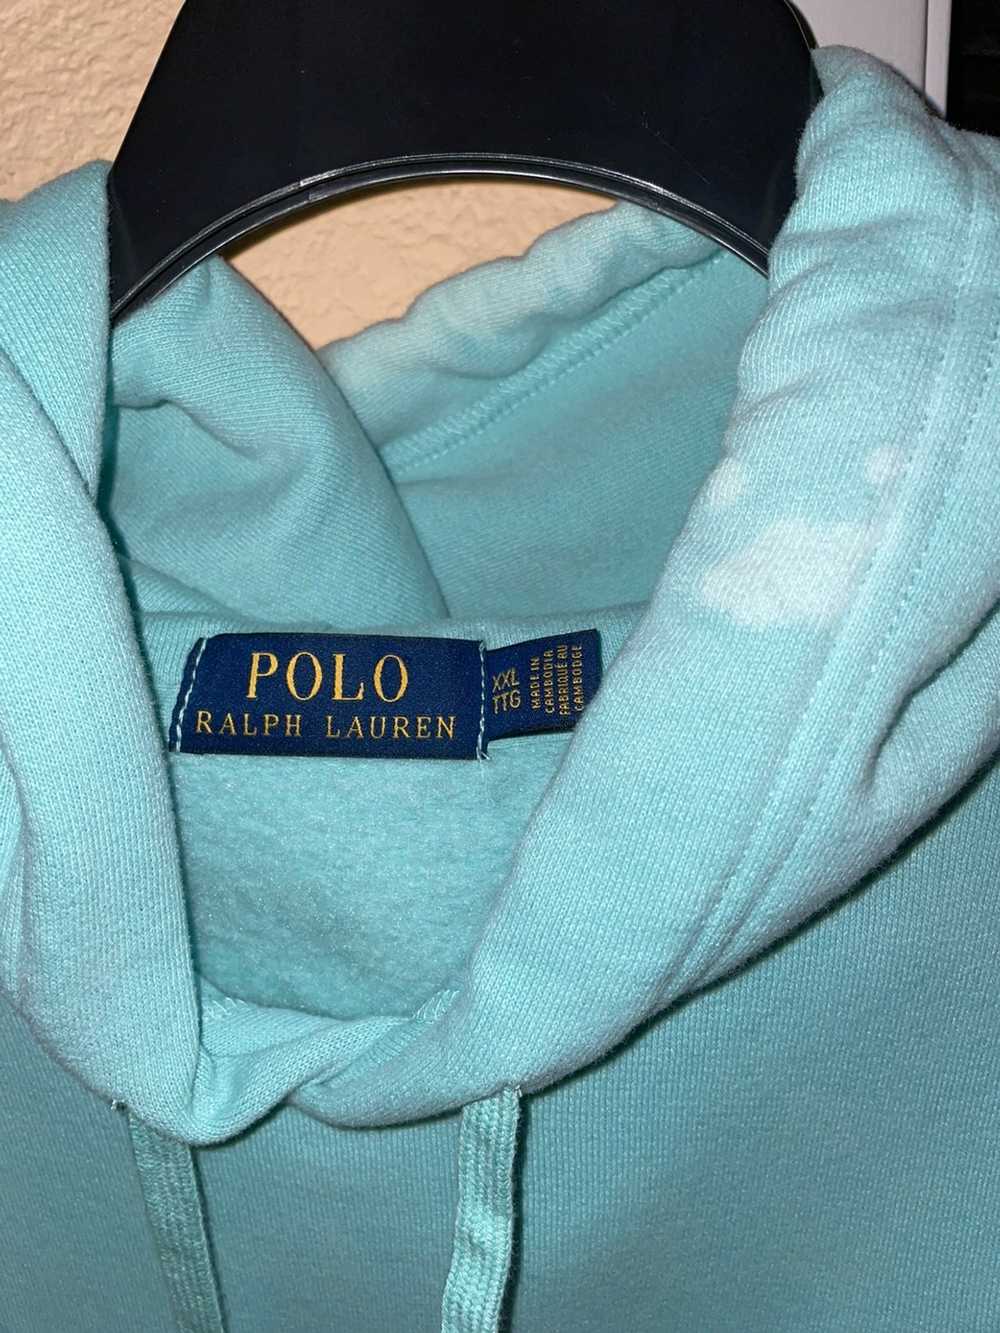 Polo Ralph Lauren Polo 1992 oversize hoodie - image 3